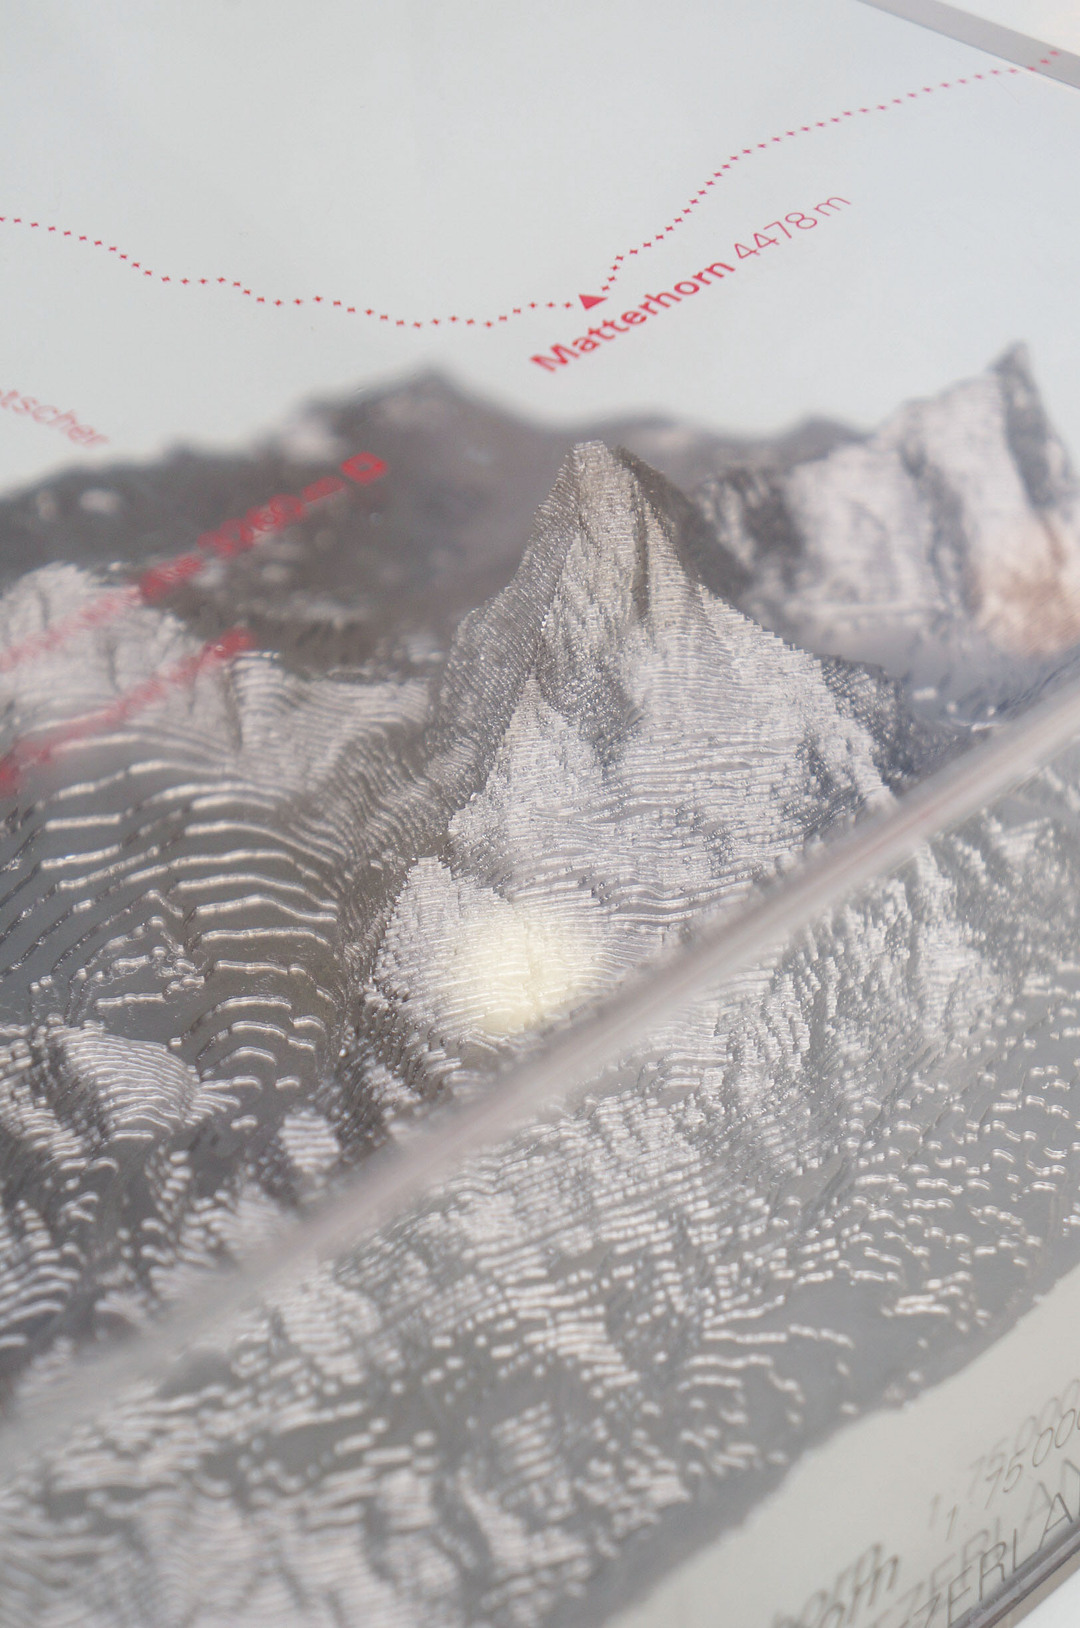 Swiss Reliorama Mountain Diorama Object Matterhorn/レリオラマ スイス製 精密山岳模型 ジオラマ 模型 オブジェ インテリア マッターホルン